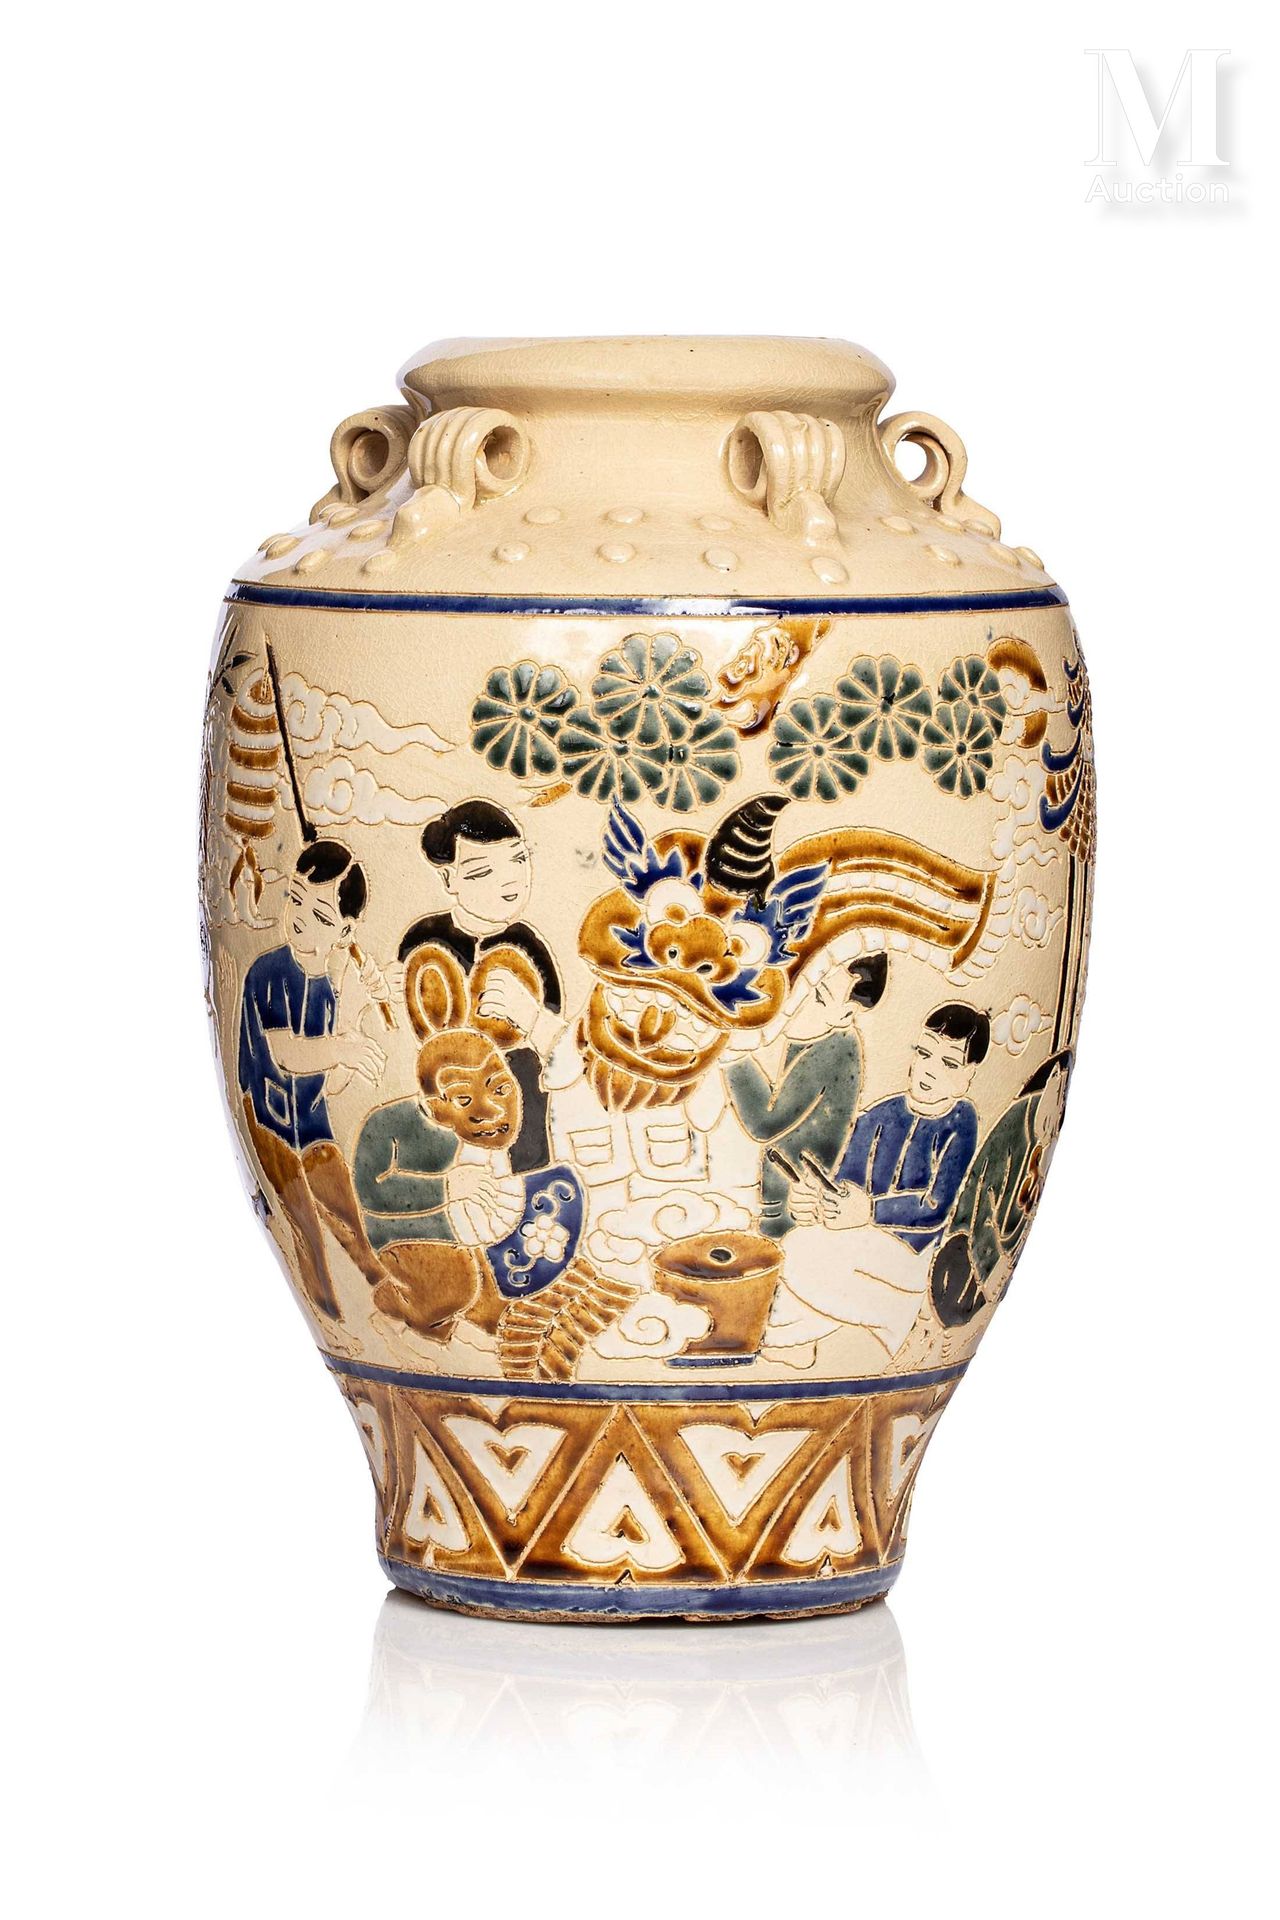 VIETNAM, moderne, Vase en grès émaillé 包括村庄节日的装饰

在边华生产的风格中

高度：29厘米